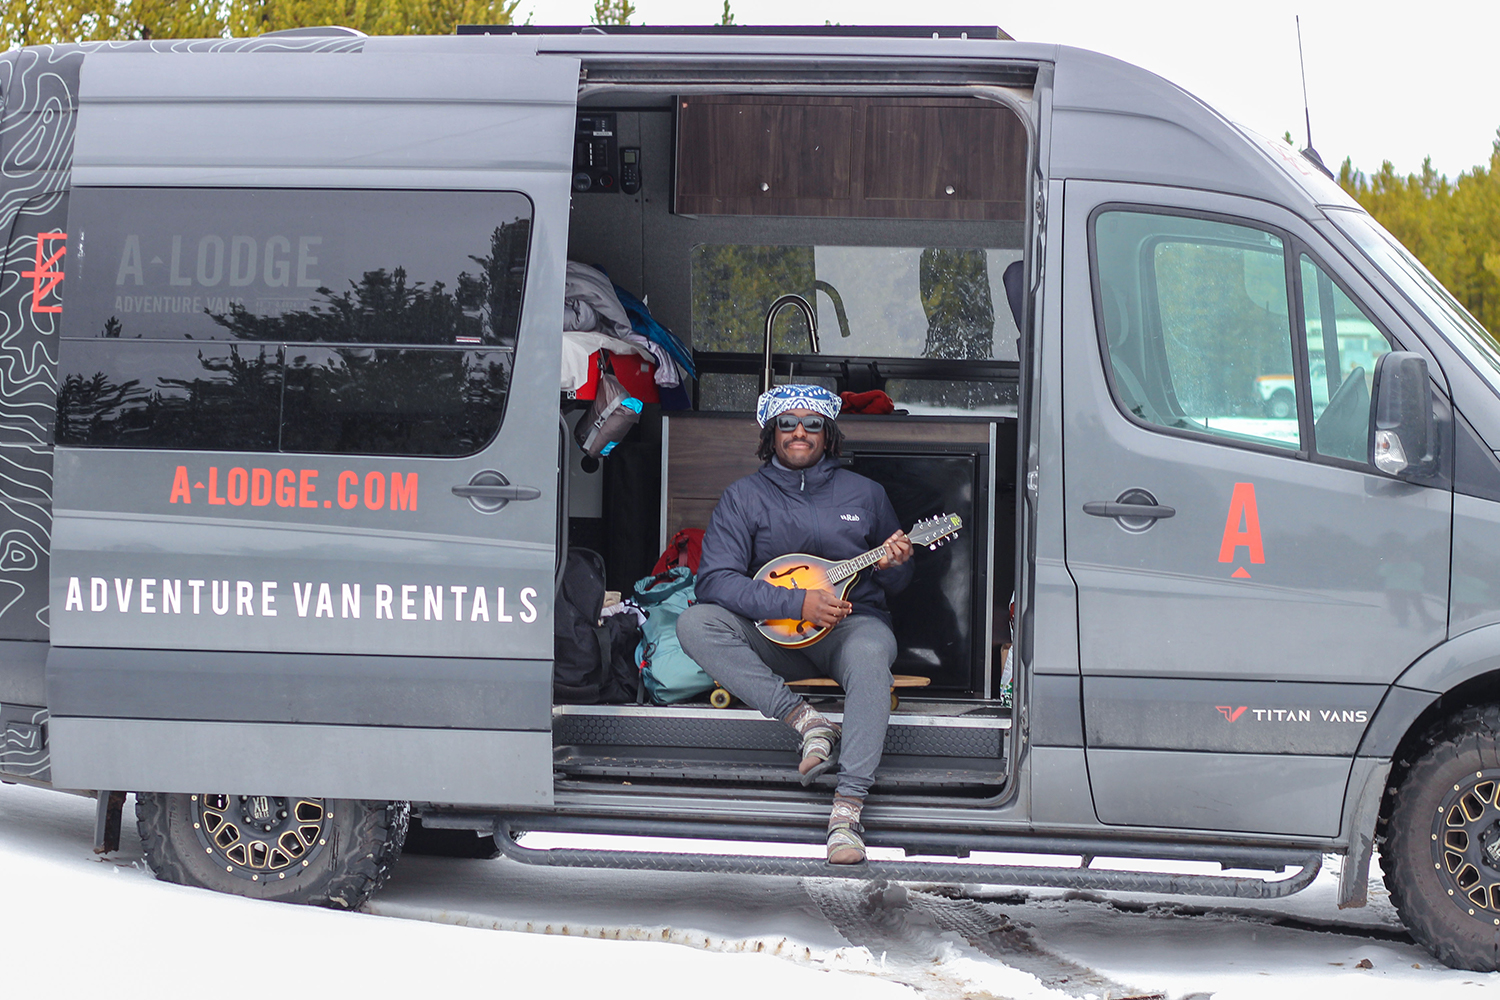 Writer and adventurer Joe Kanzangu sits in an A-Lodge adventure van